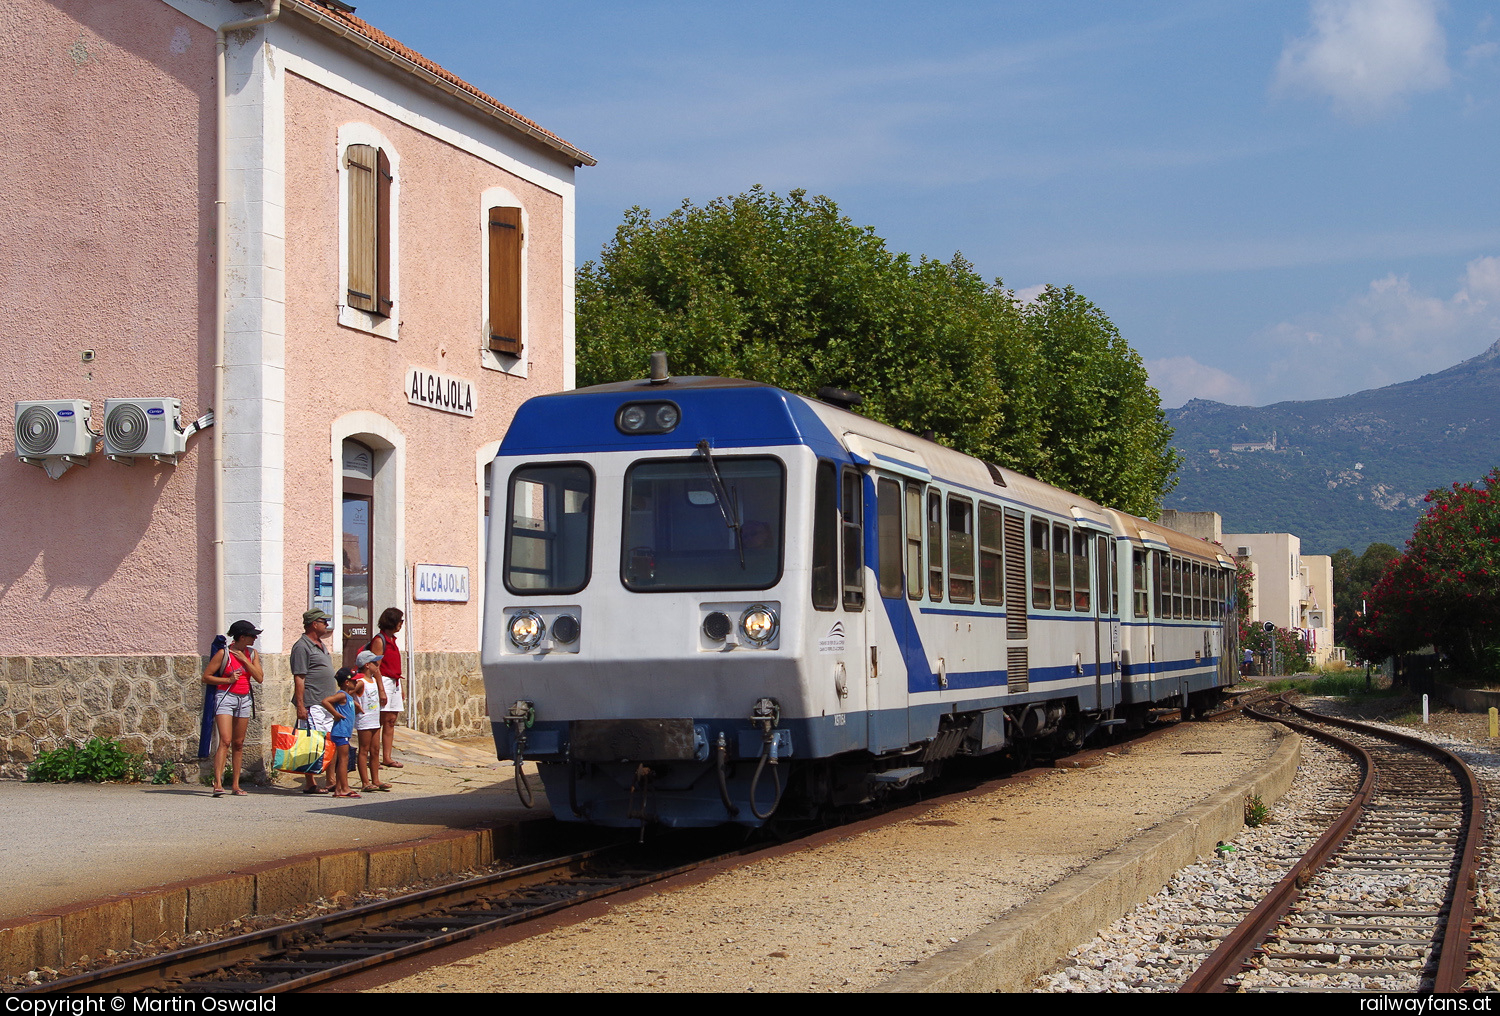 Chemins de fer de la Corse (CFC) X97 054 in Algajola  Railwayfans